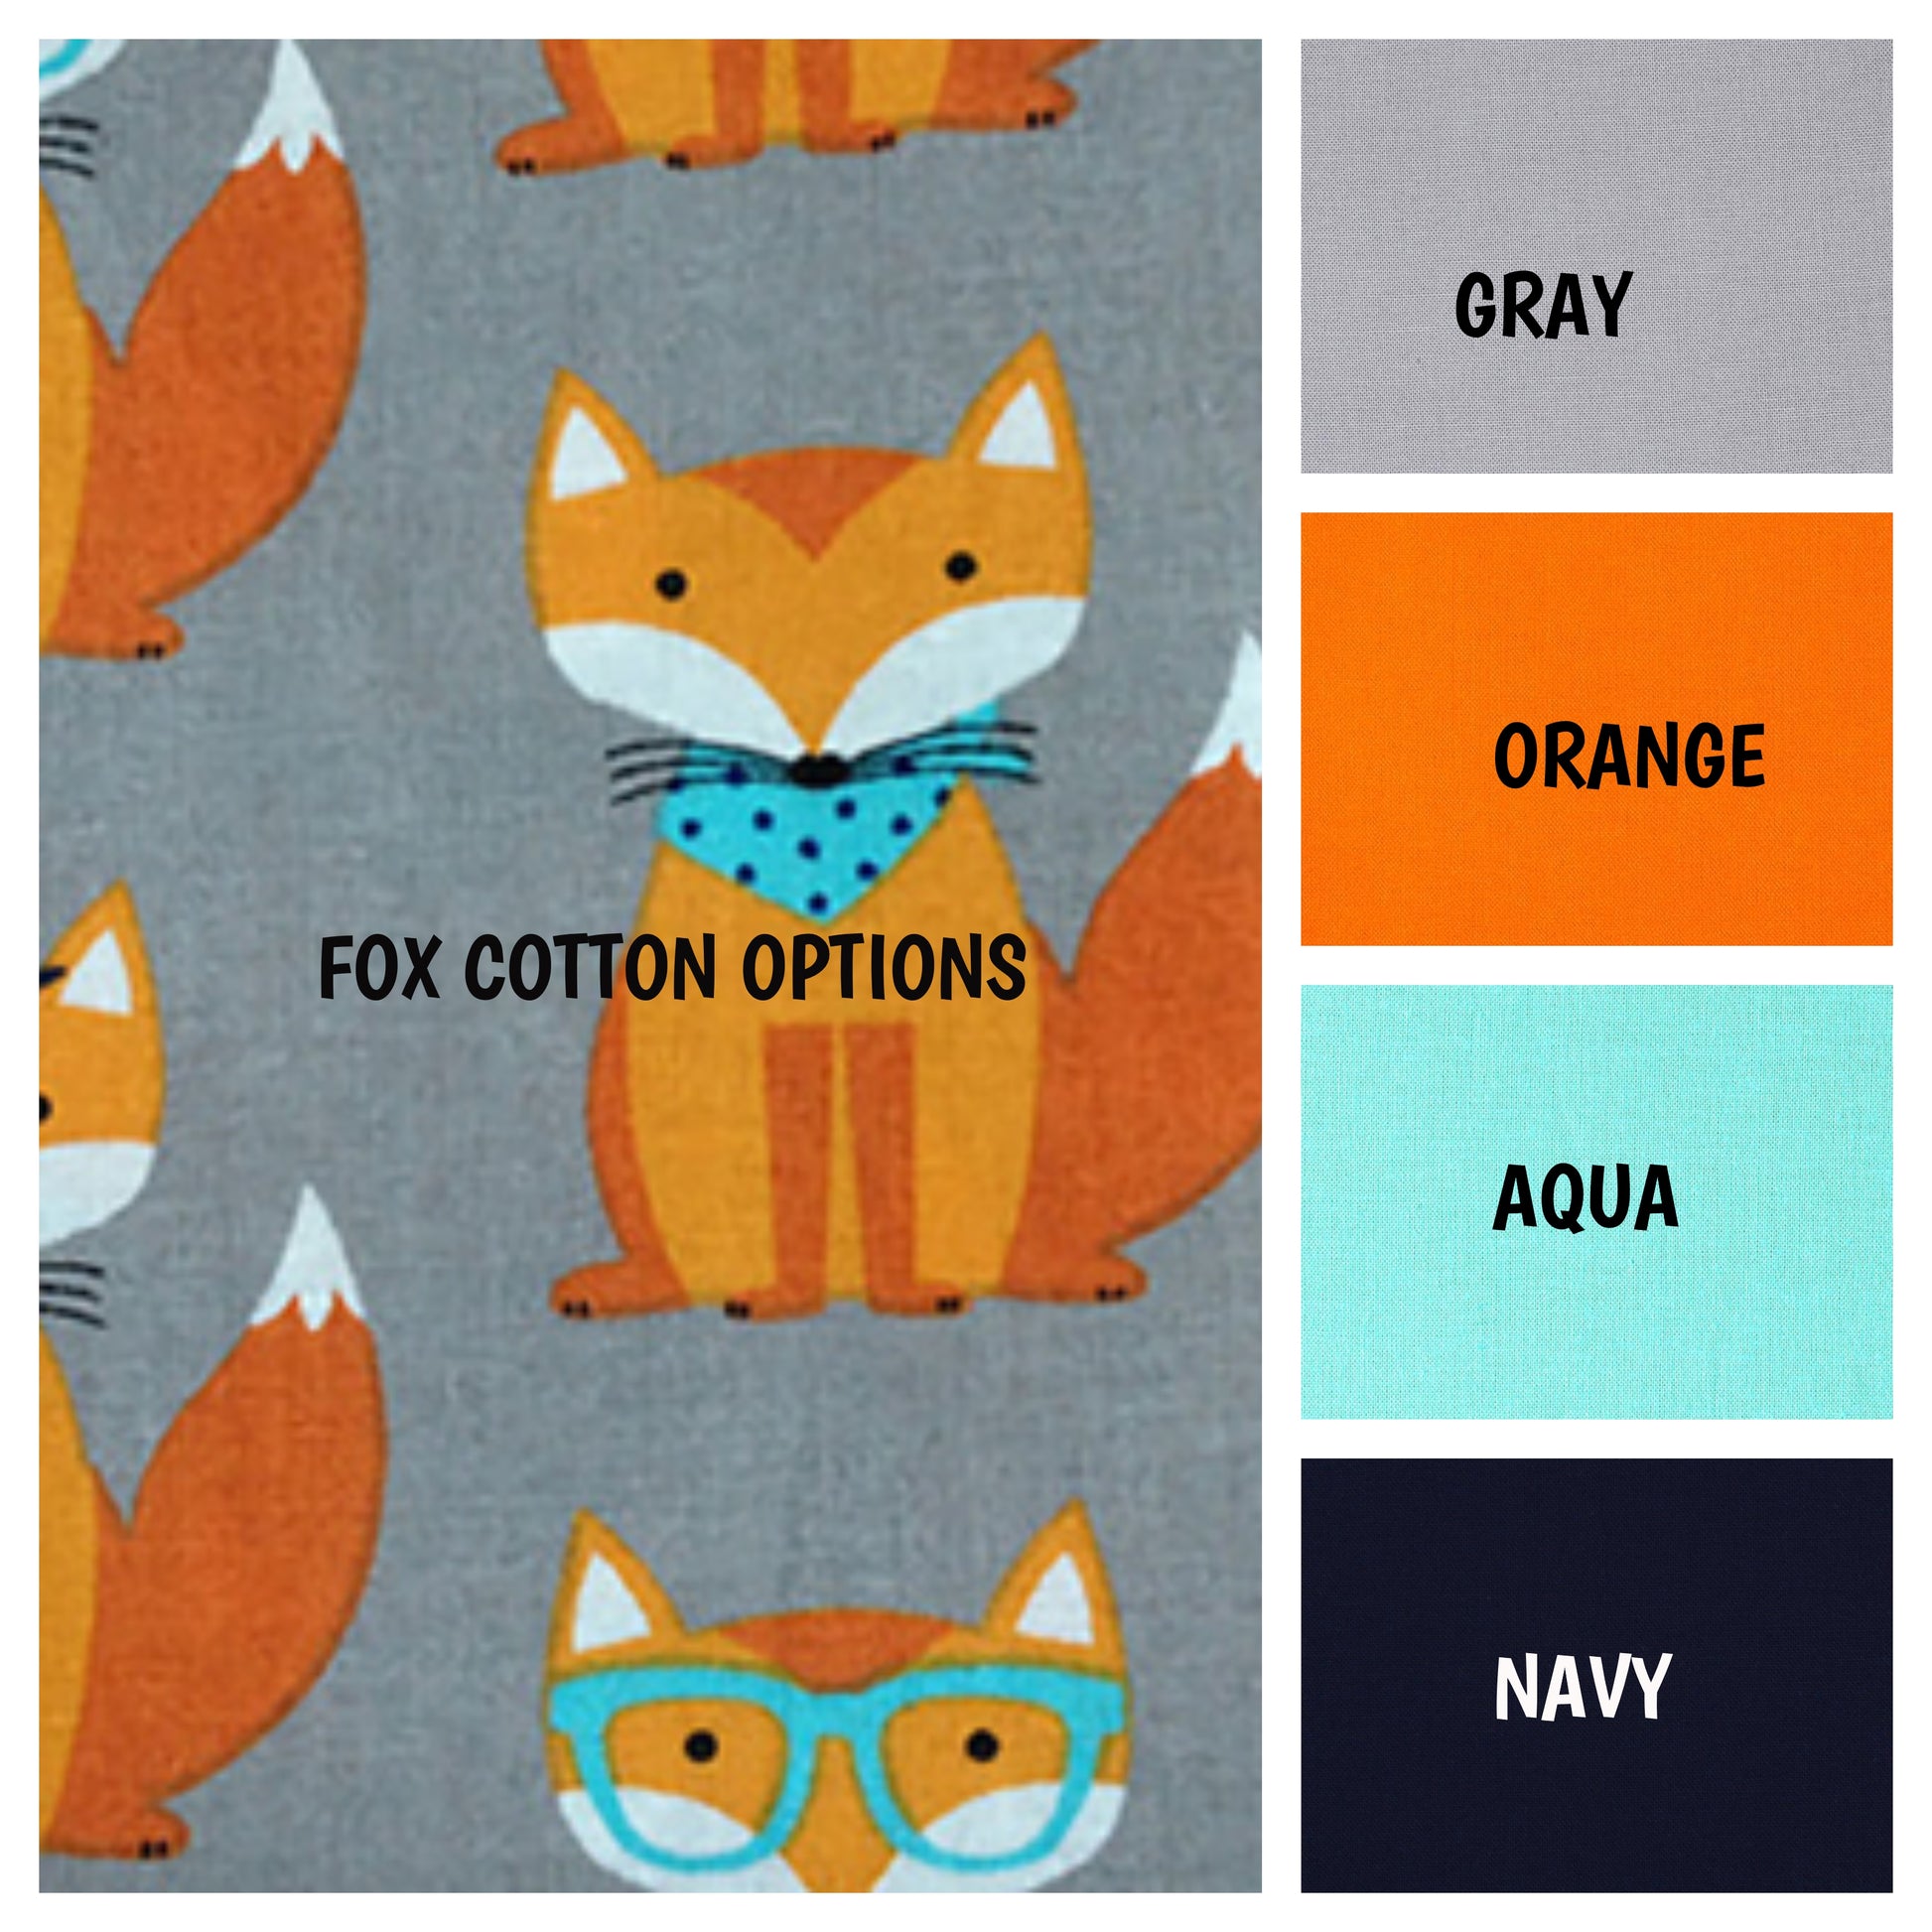 ORANGE FOX COTTON BACK OPTIONS; BLACK, GRAY, ORANGE, AQUA, NAVY